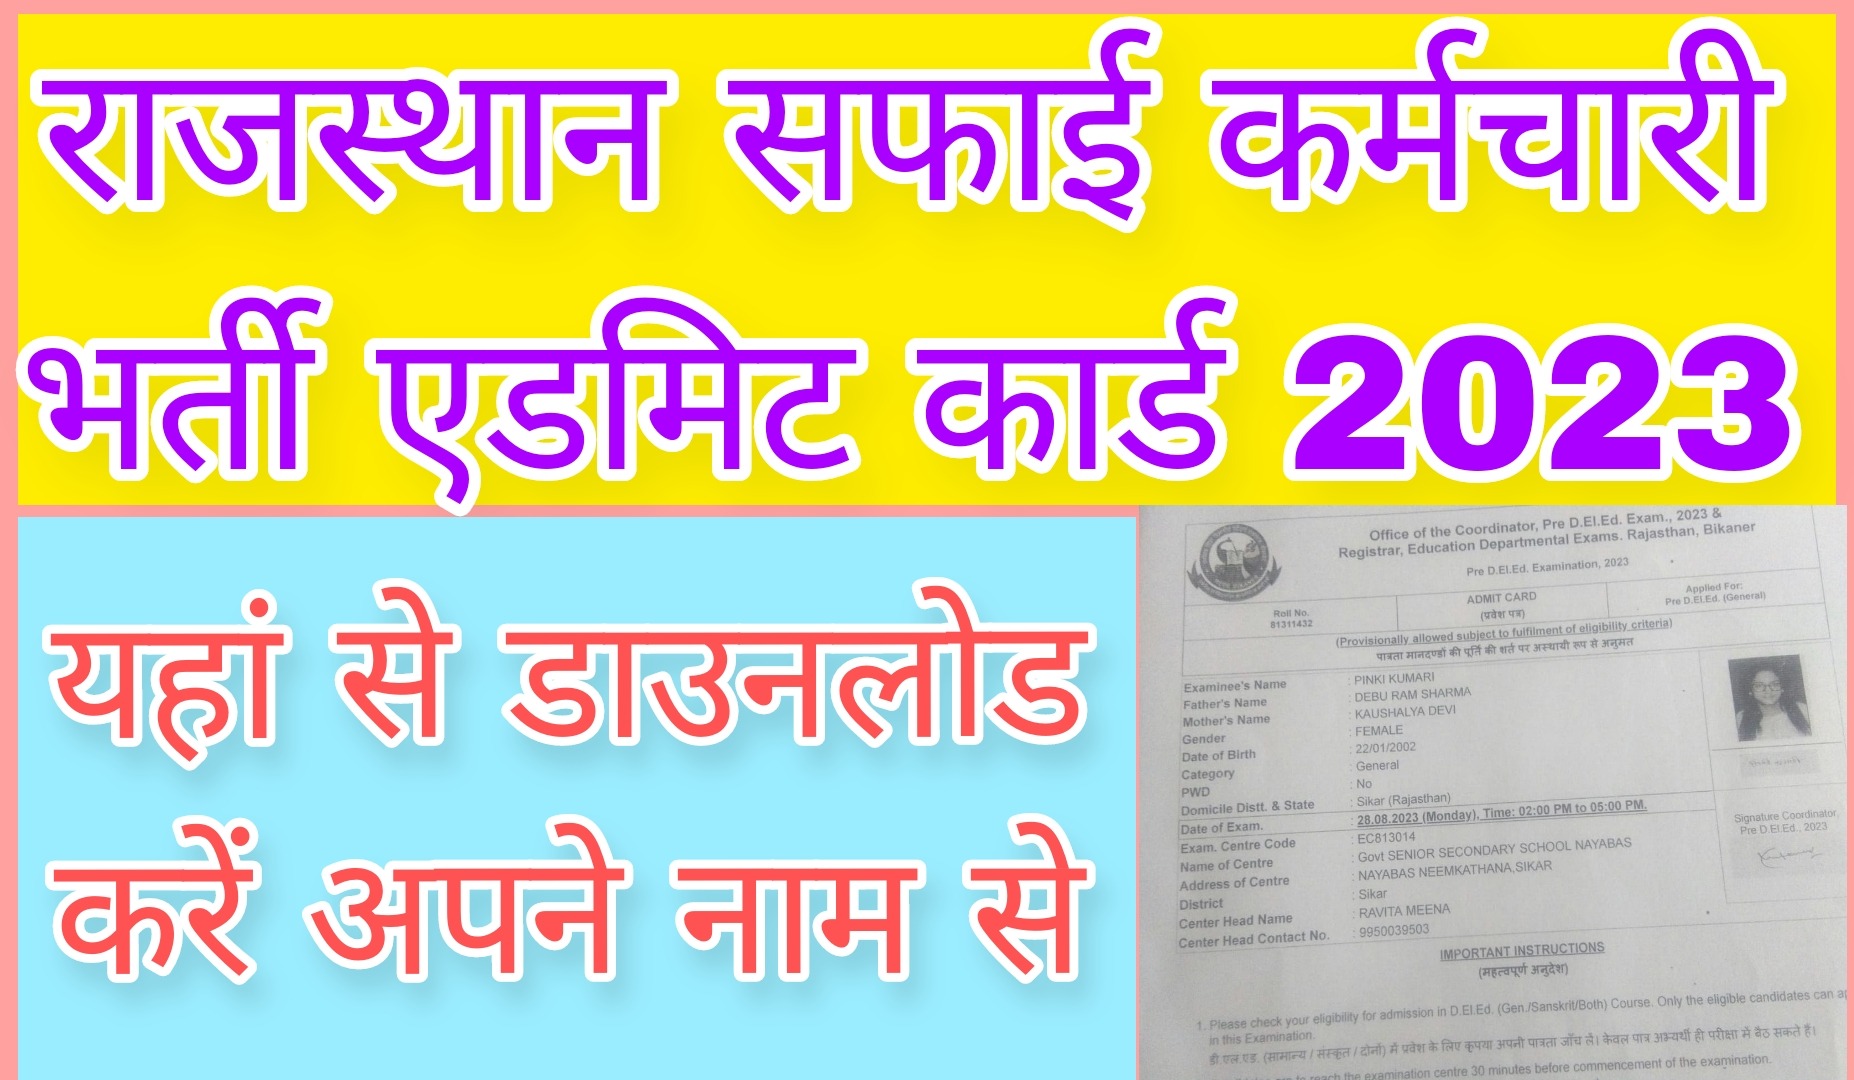 Rajasthan Safai karmchari bharti admit card 2023 download name wise